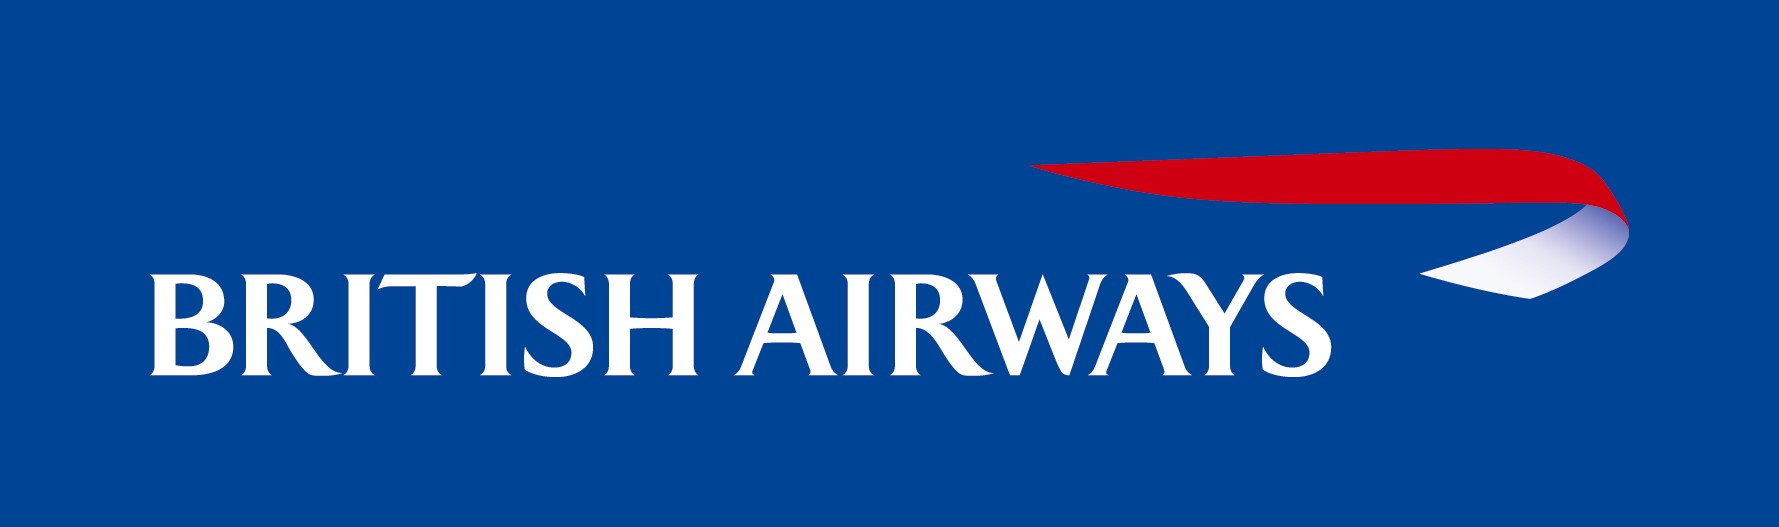 British Airways Logo Banner - British Airways, Transparent background PNG HD thumbnail